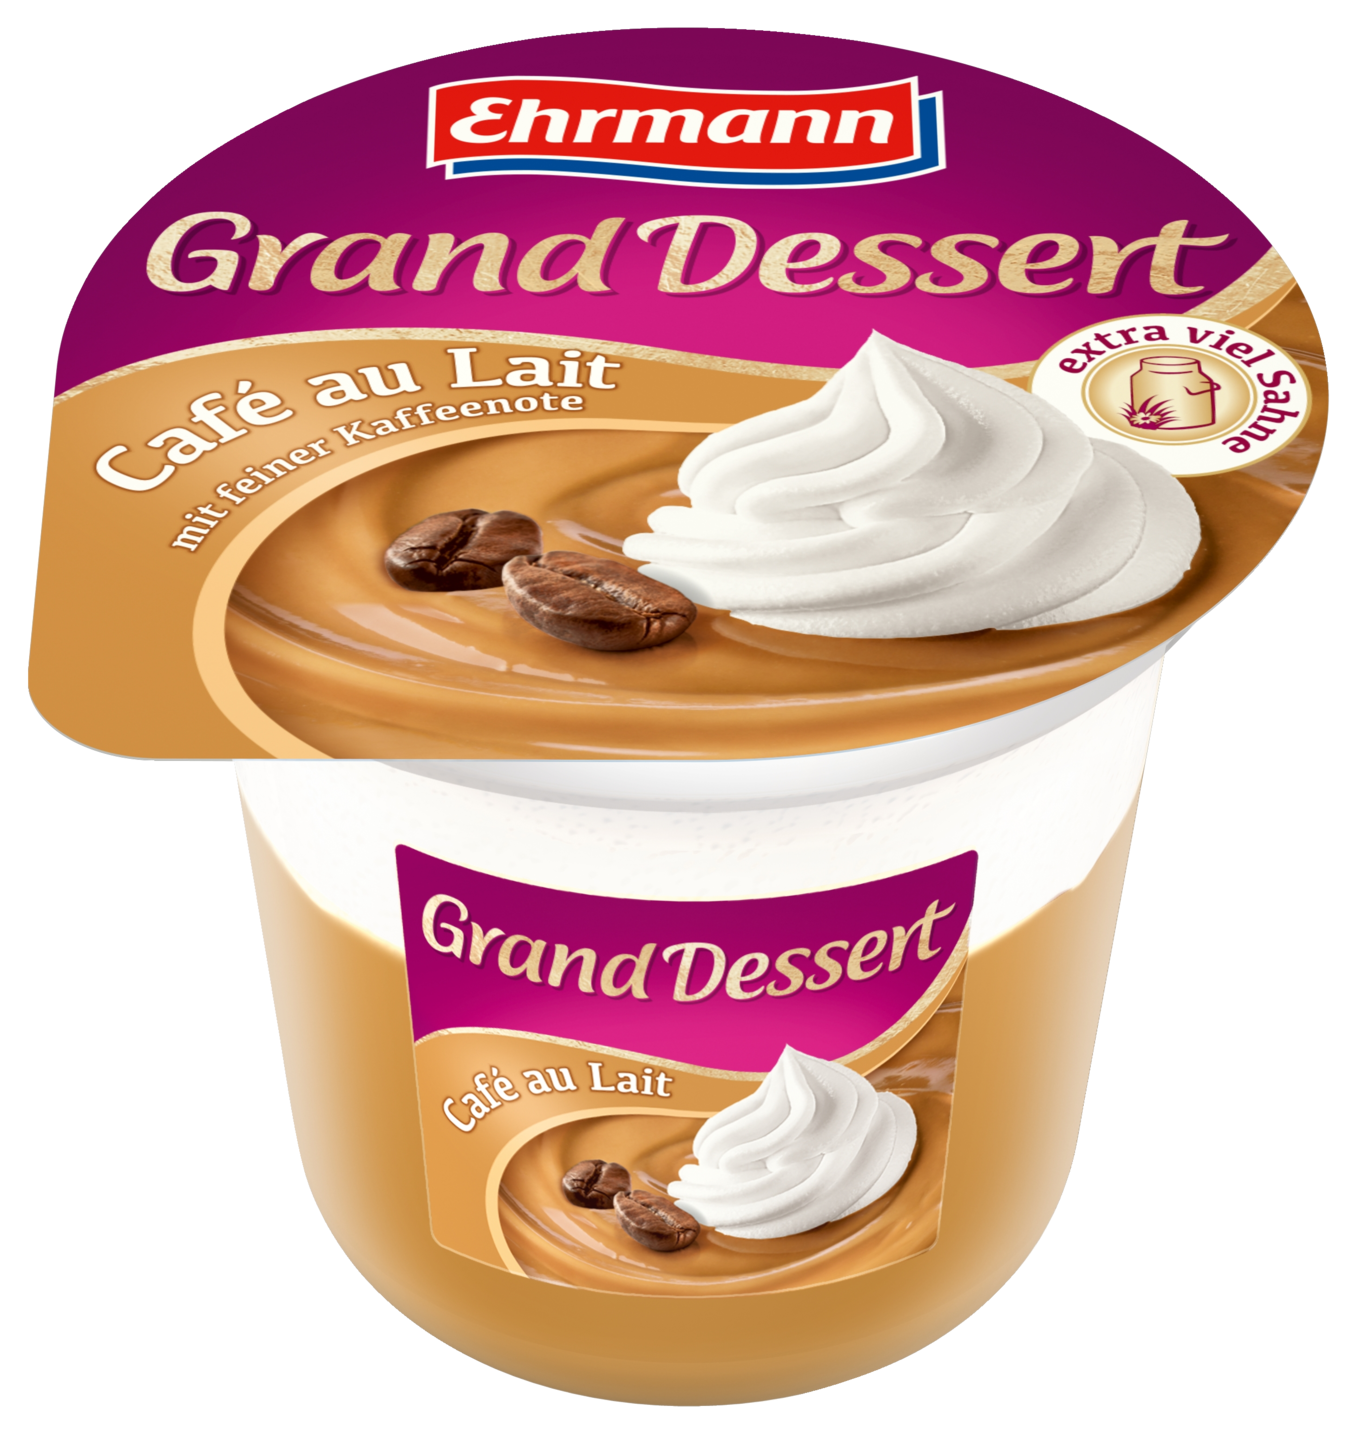 Ehrmann Grand Dessert 190g café au lait